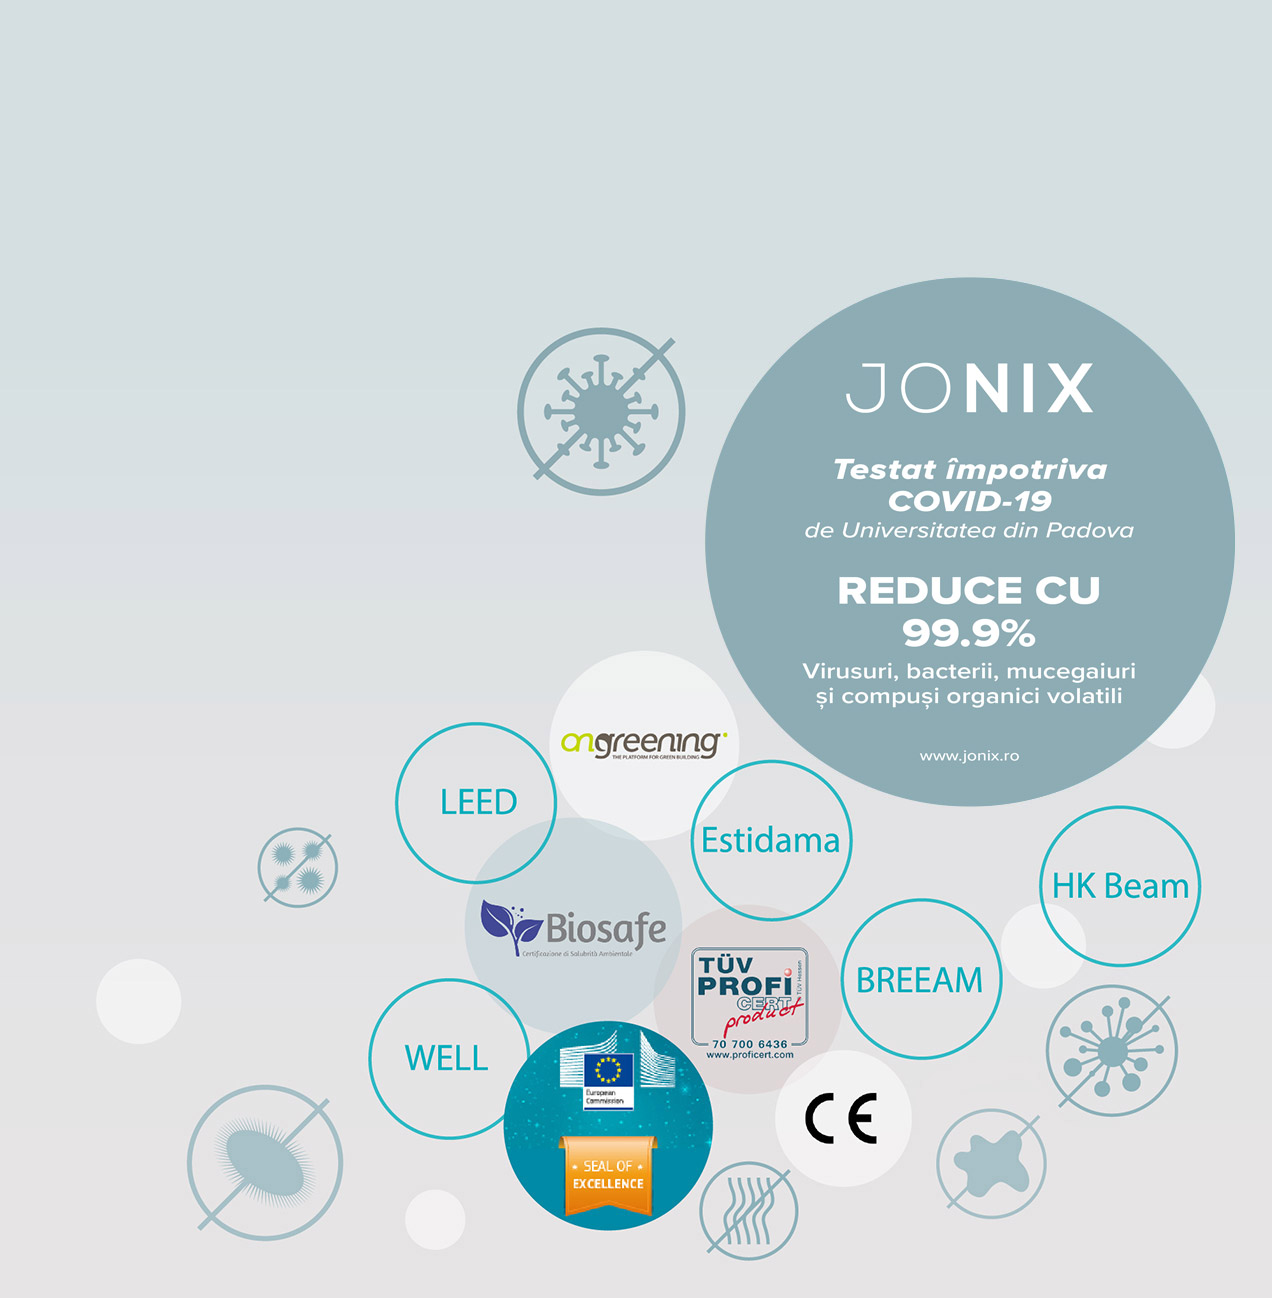 Jonix Certifications